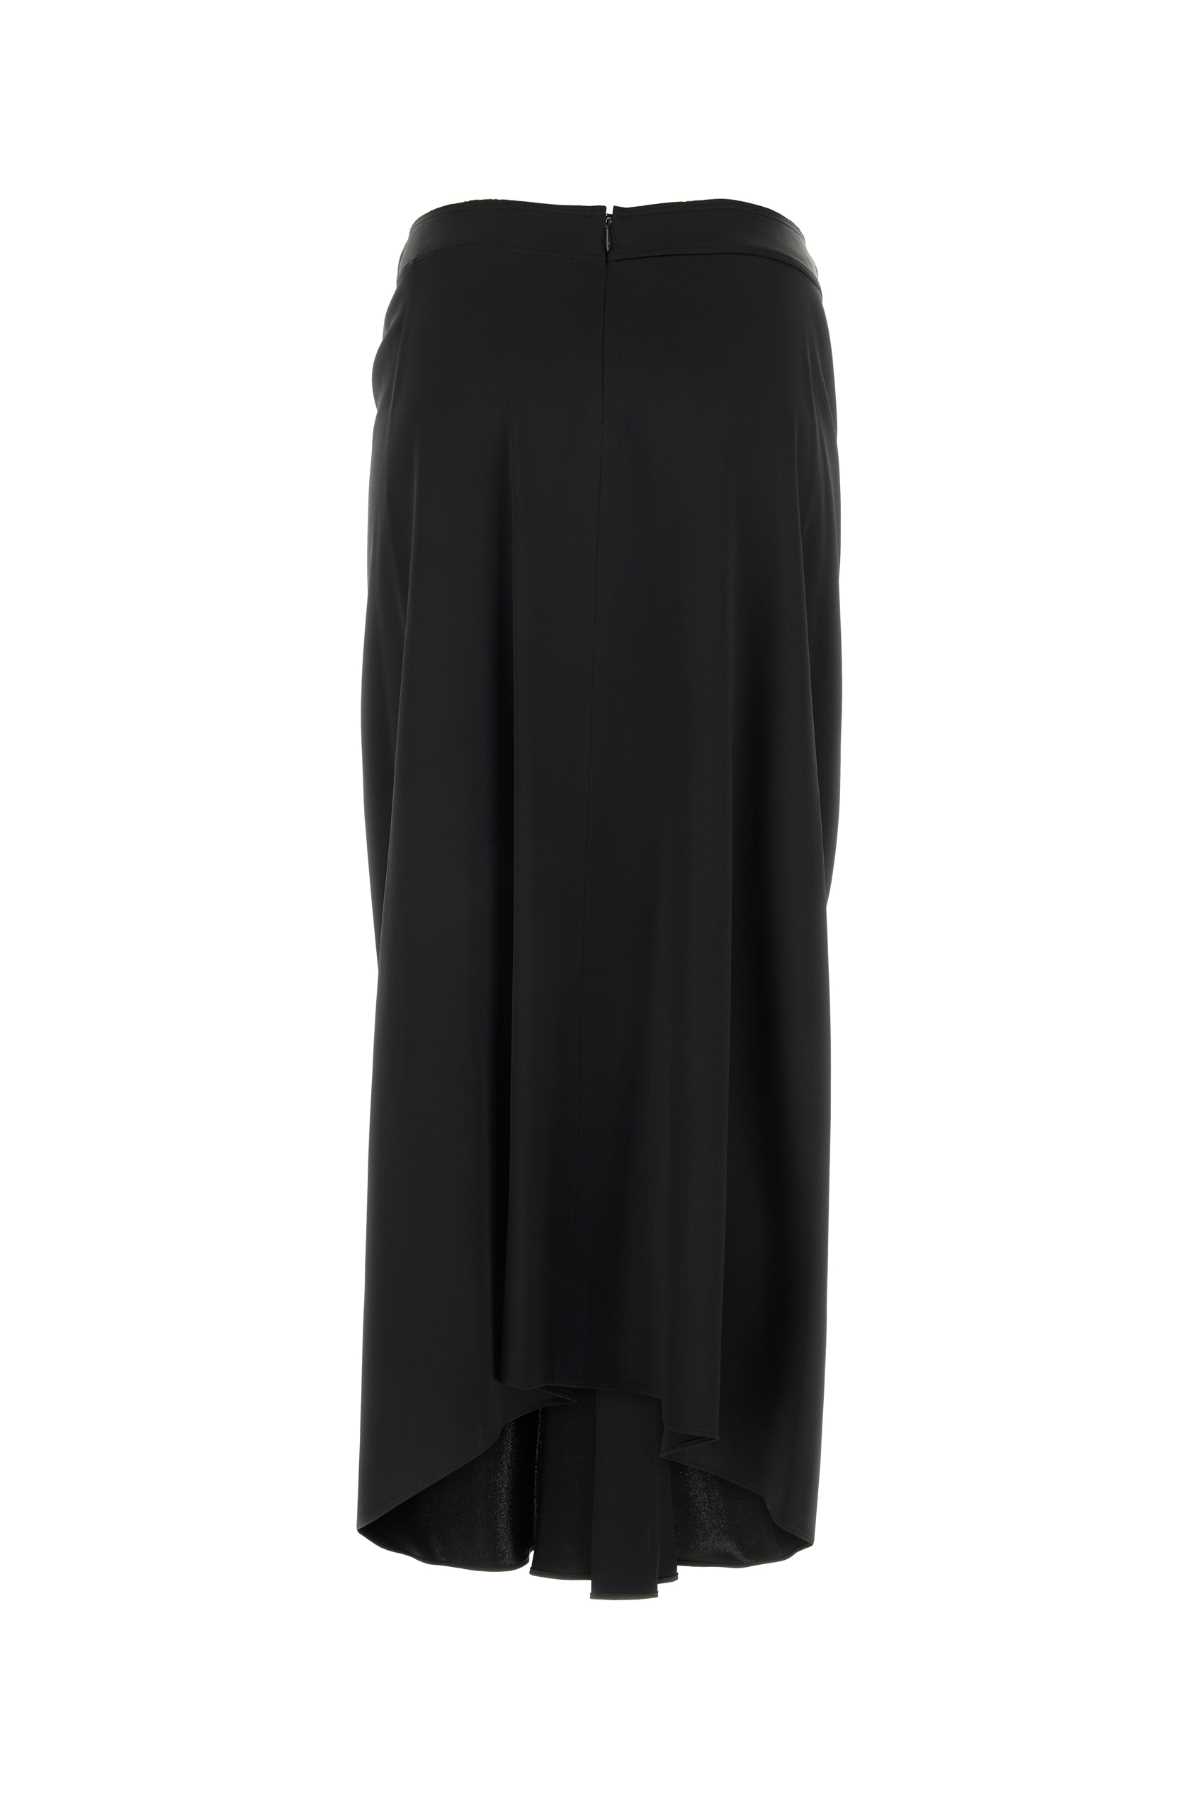 Stella Mccartney Black Satin Skirt